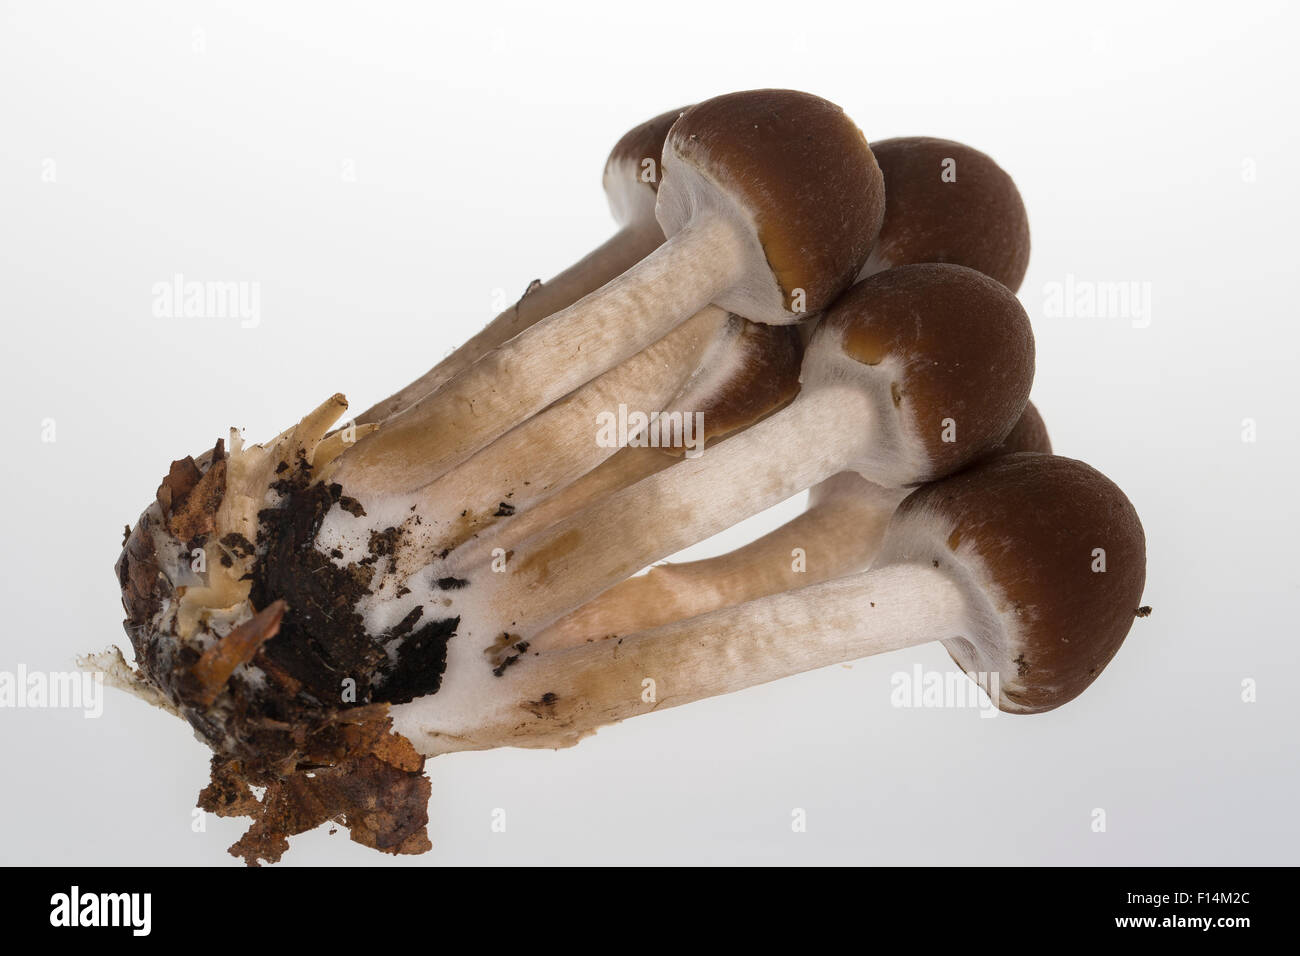 Common Stump Brittlestem, Wässriger Mürbling, Wässriger Faserling, Psathyrella piluliformis, Psathyrella hydrophila Stock Photo